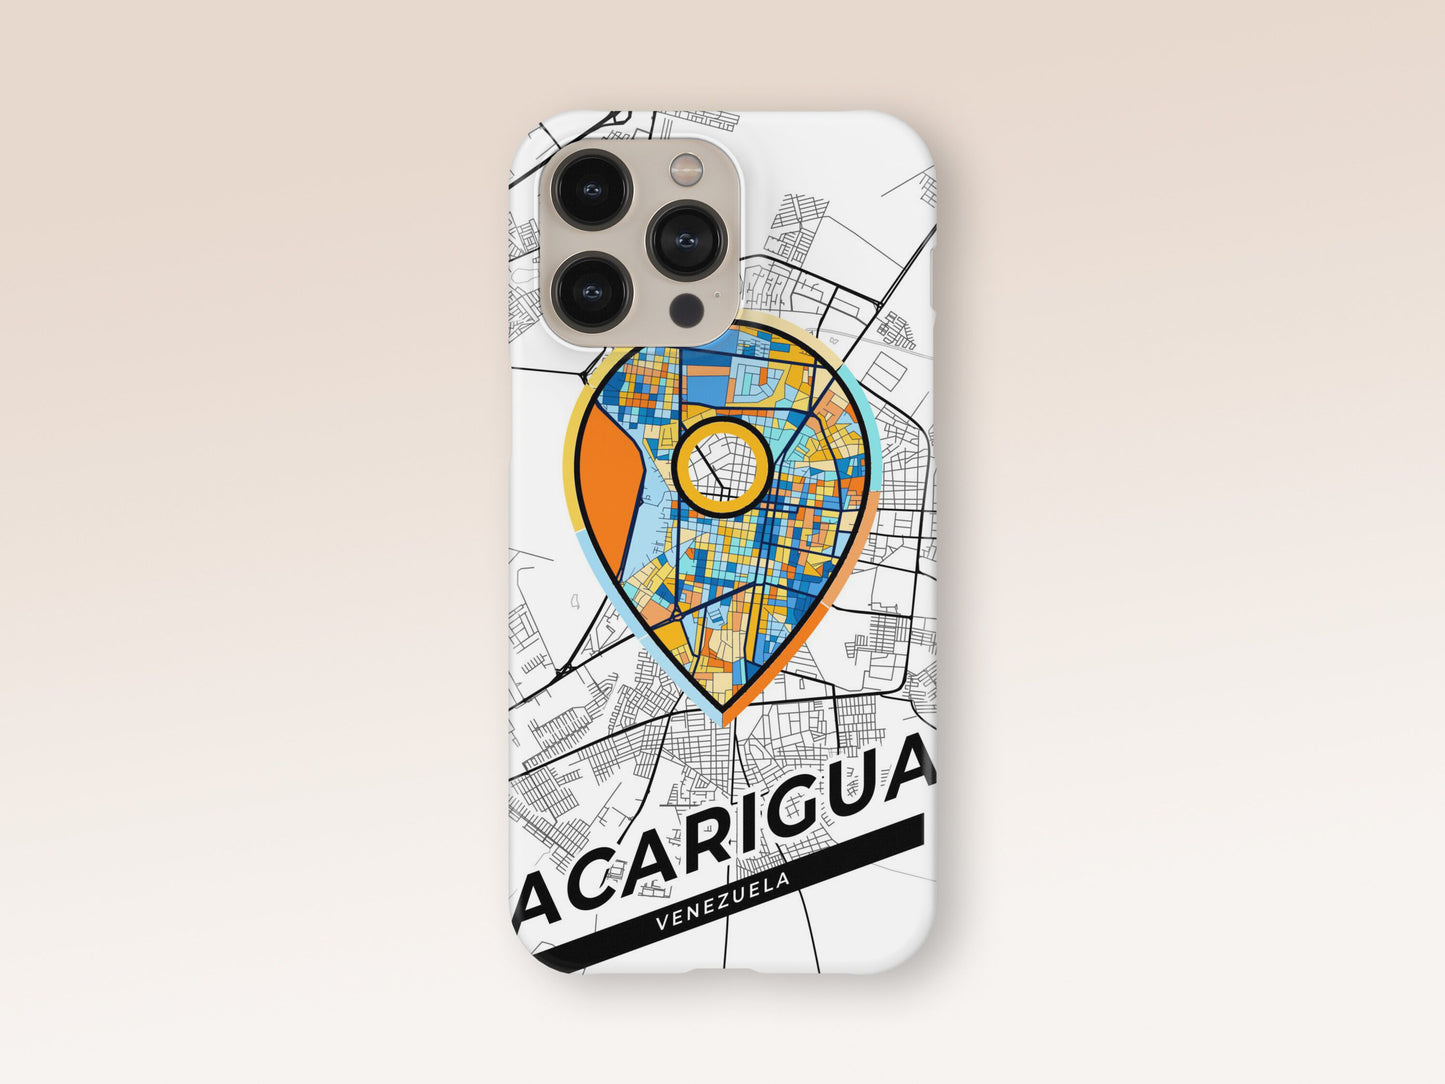 Acarigua Venezuela slim phone case with colorful icon. Birthday, wedding or housewarming gift. Couple match cases. 1